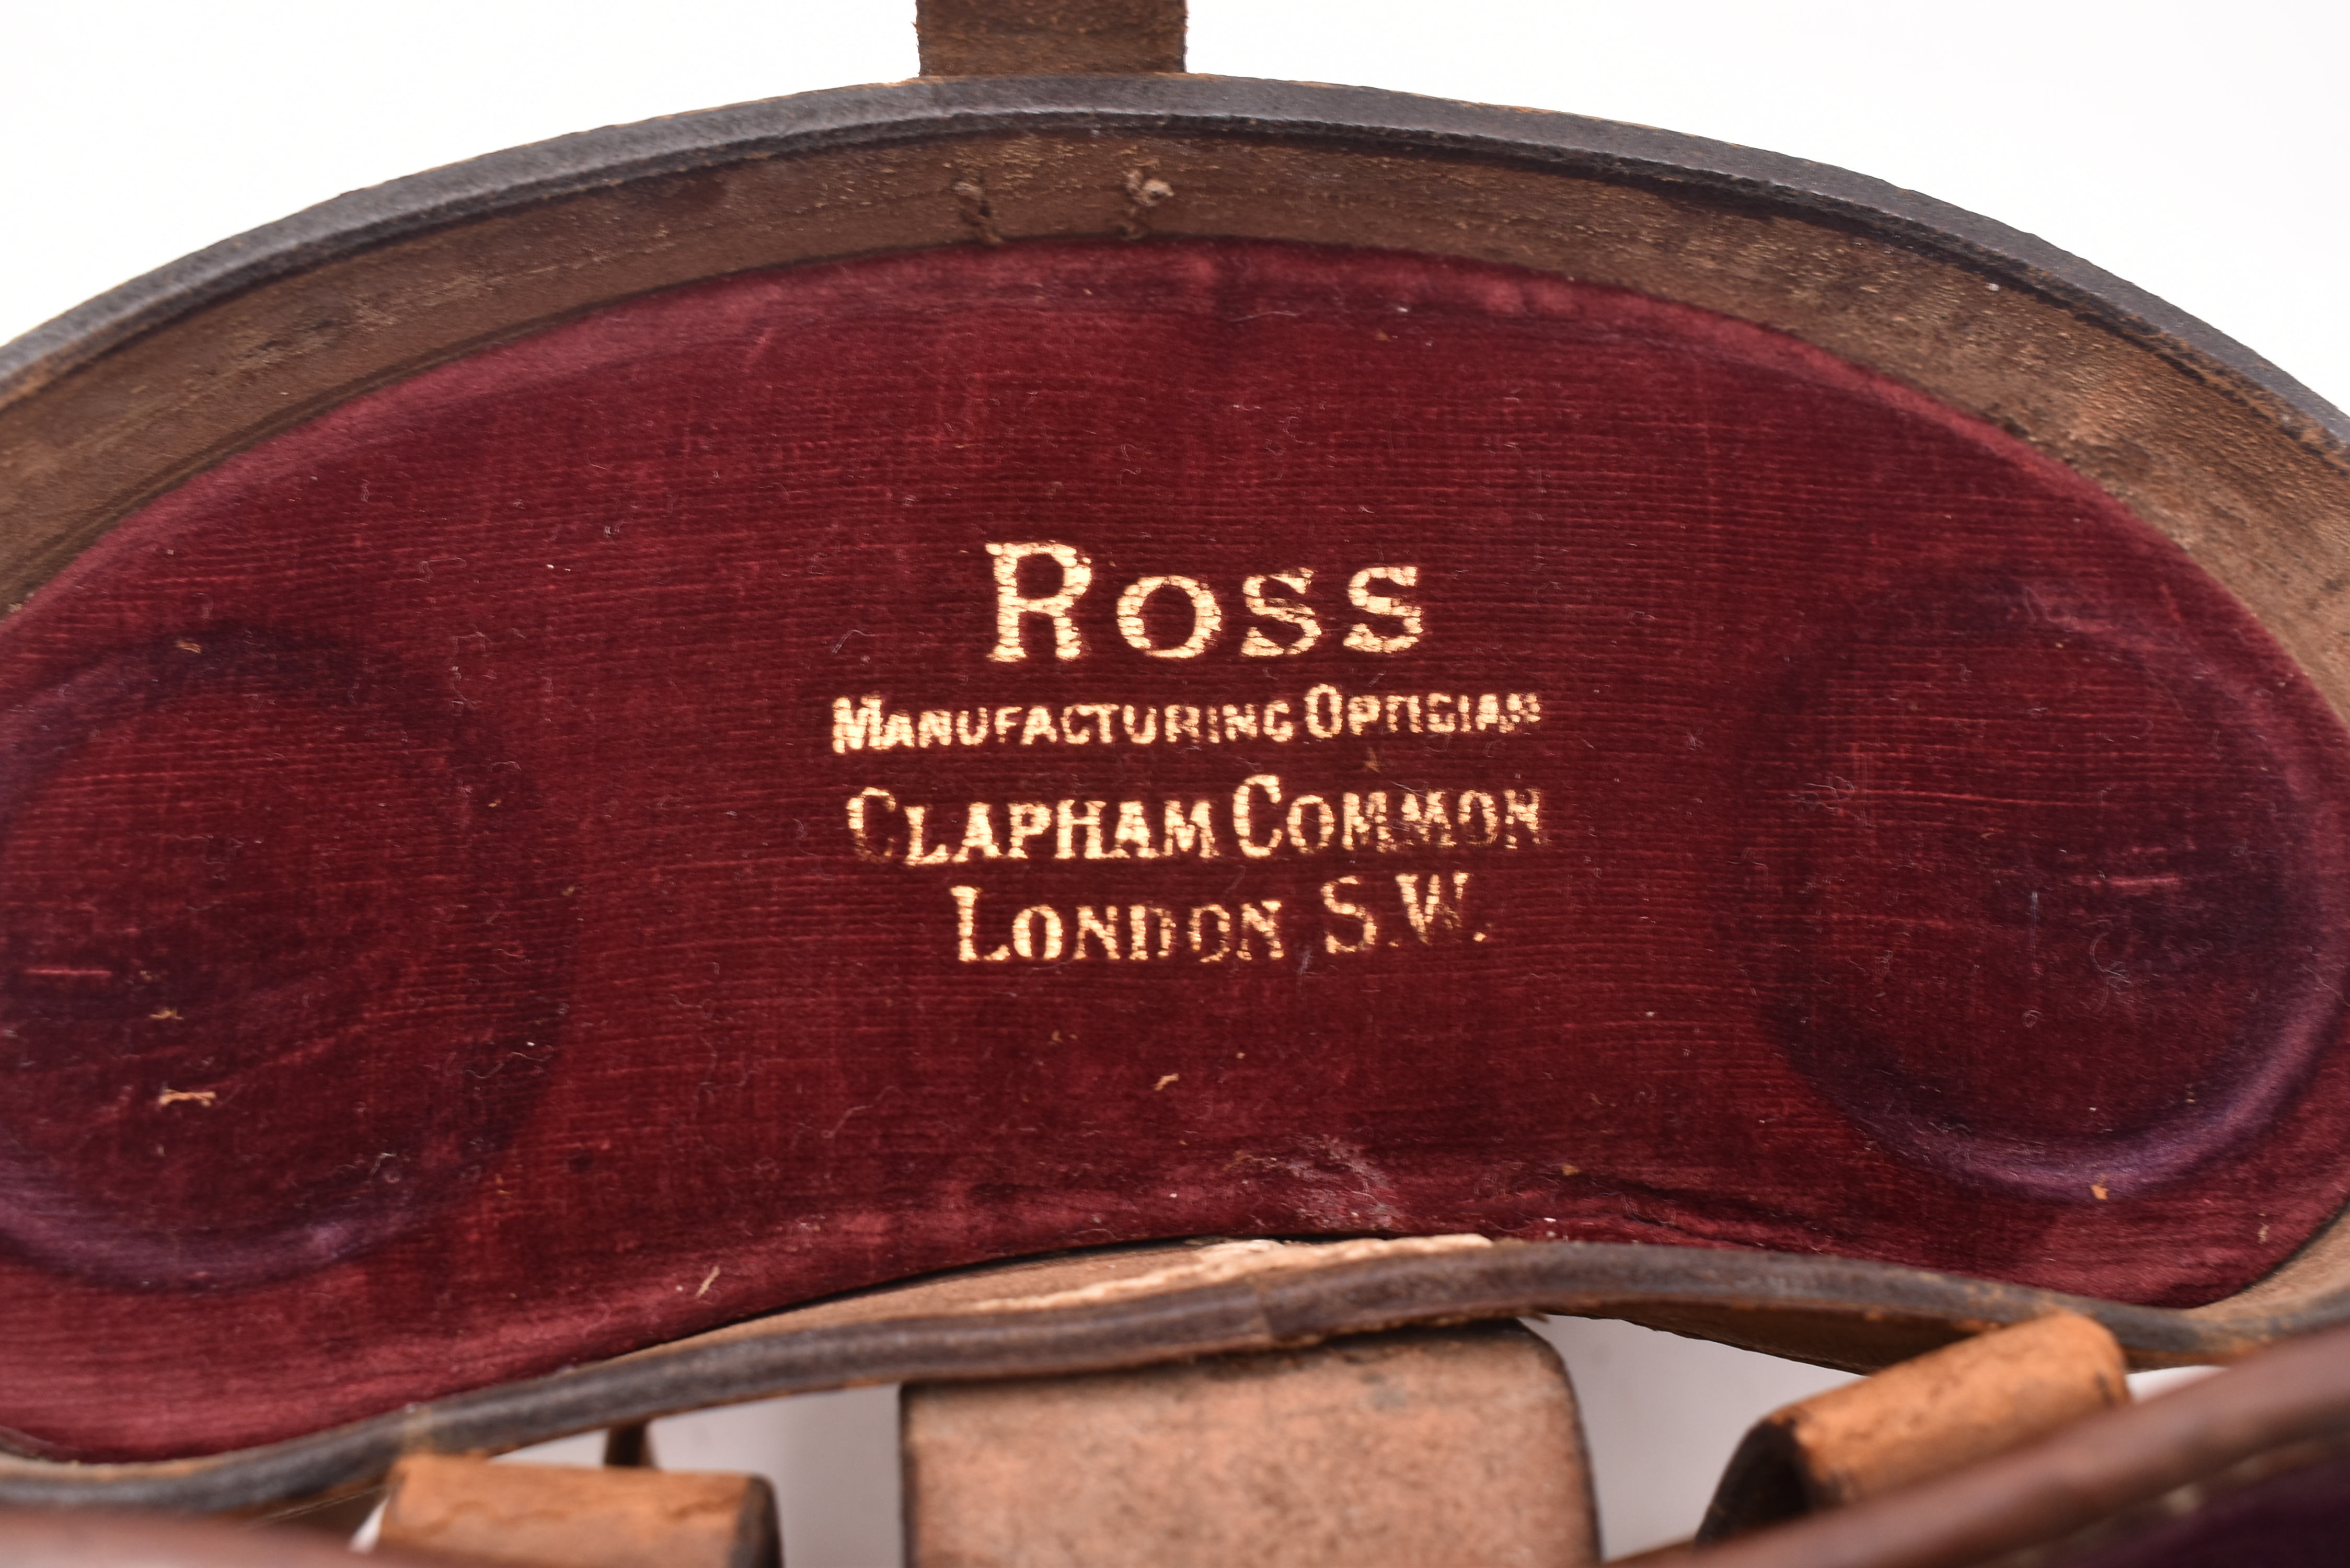 ROSS OF LONDON - PAIR OF EARLY 20TH CENTURY BINOCULARS - Image 2 of 7